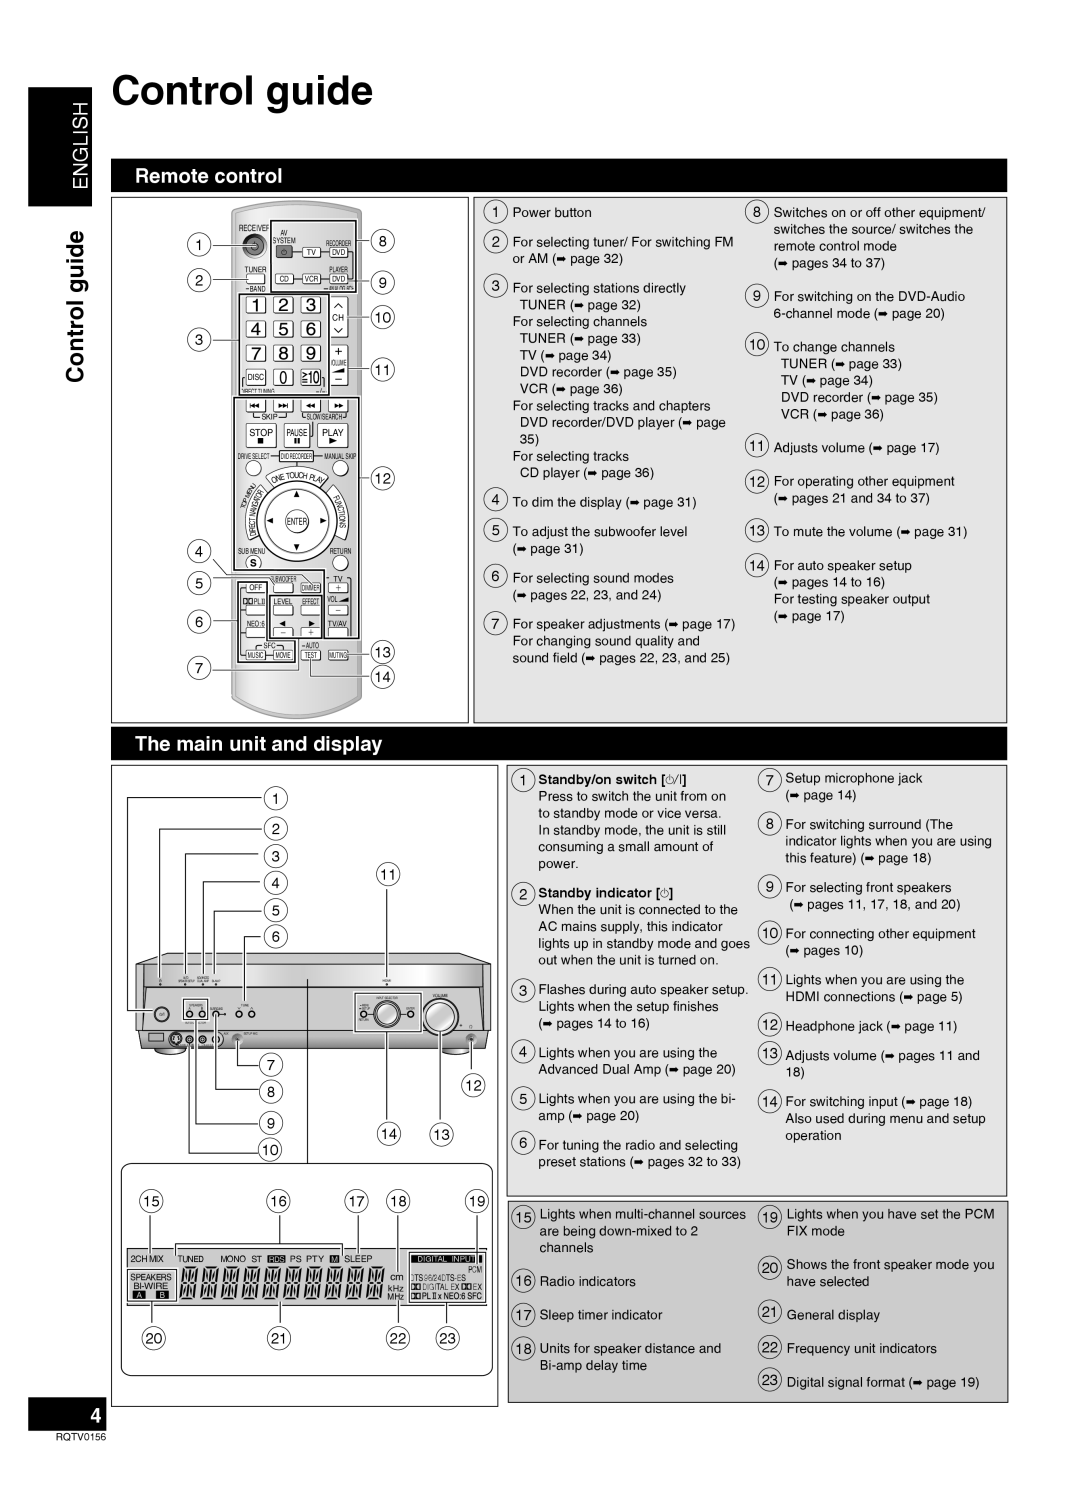 Panasonic SA-XR58 manual Control guide, Remote control, The main unit and display, English 